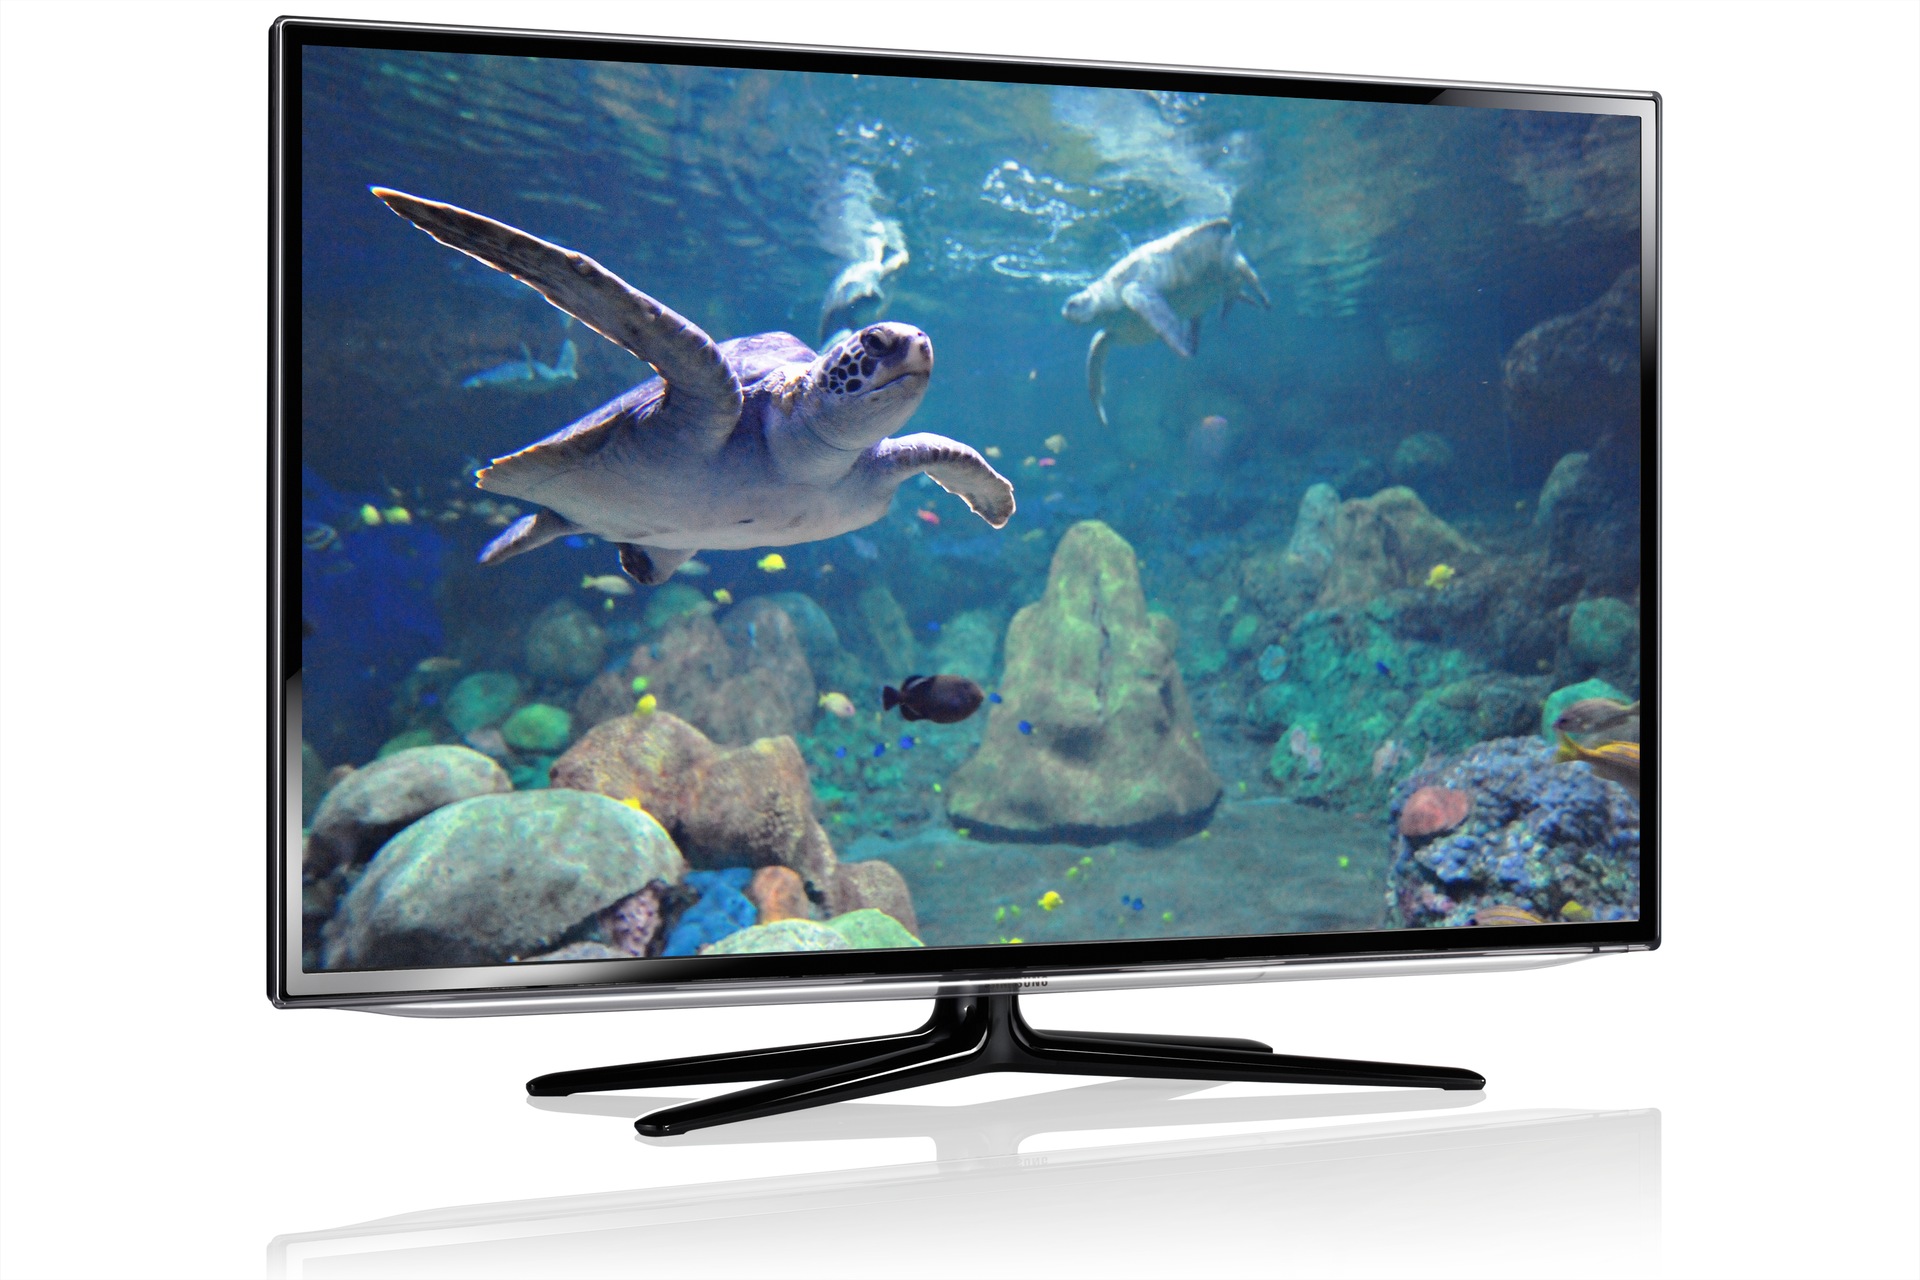 [2012] UA32ES6200R Smart 32-Inch Full HD LED TV - Samsung UAE3000 x 2000